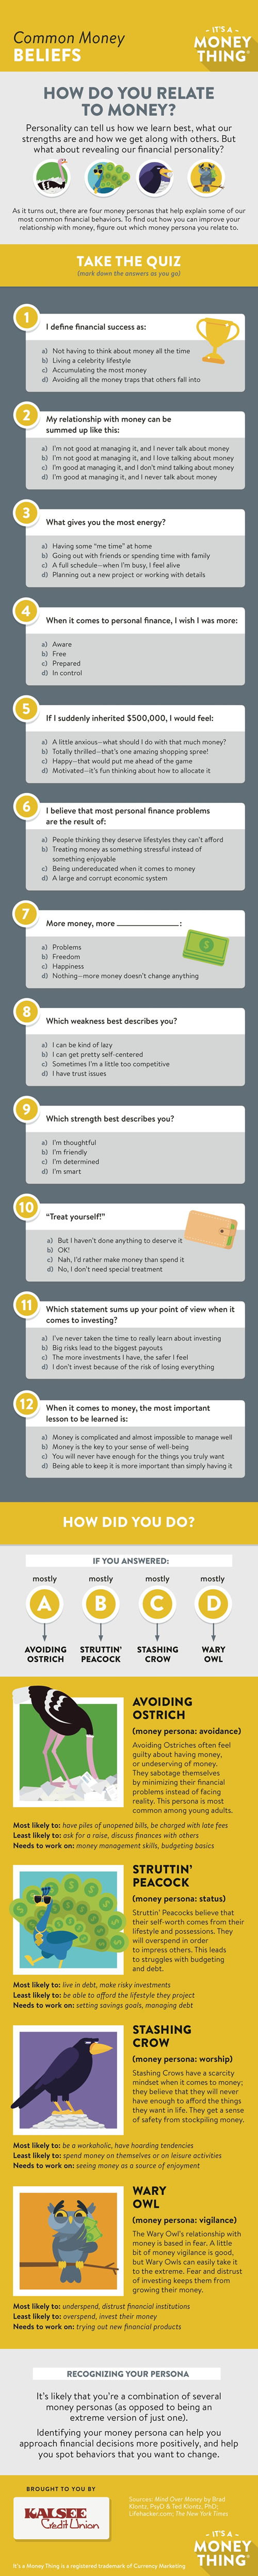 common money beliefs infographic, click for transcription